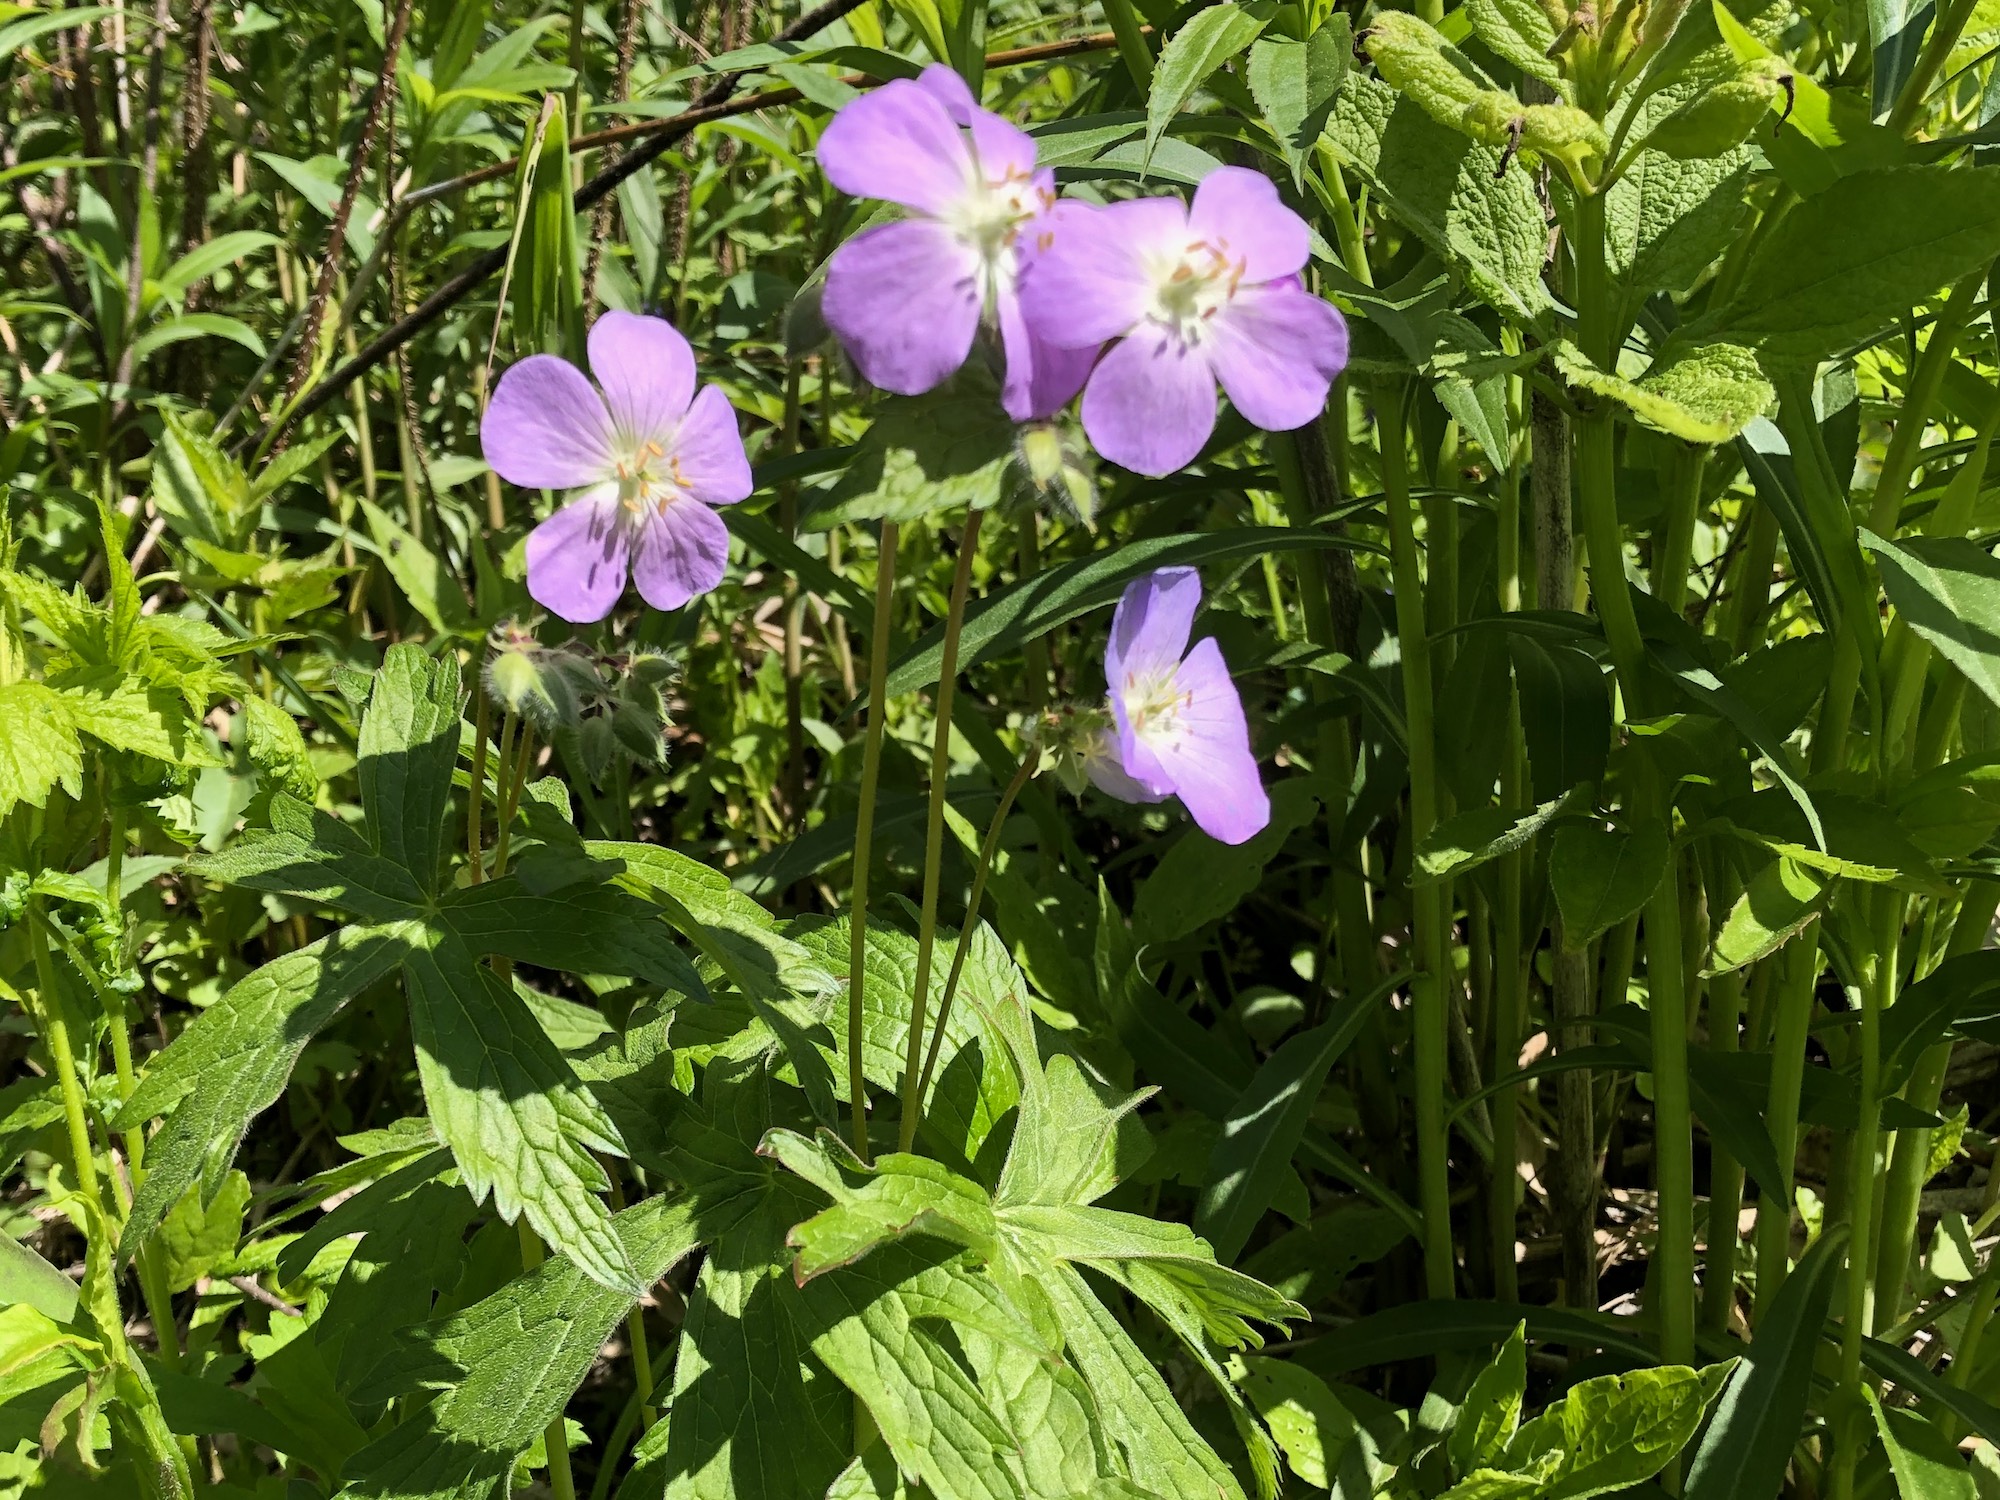 Wild Geranium in the Oak Savanna near Council Ring on May 13, 2019.